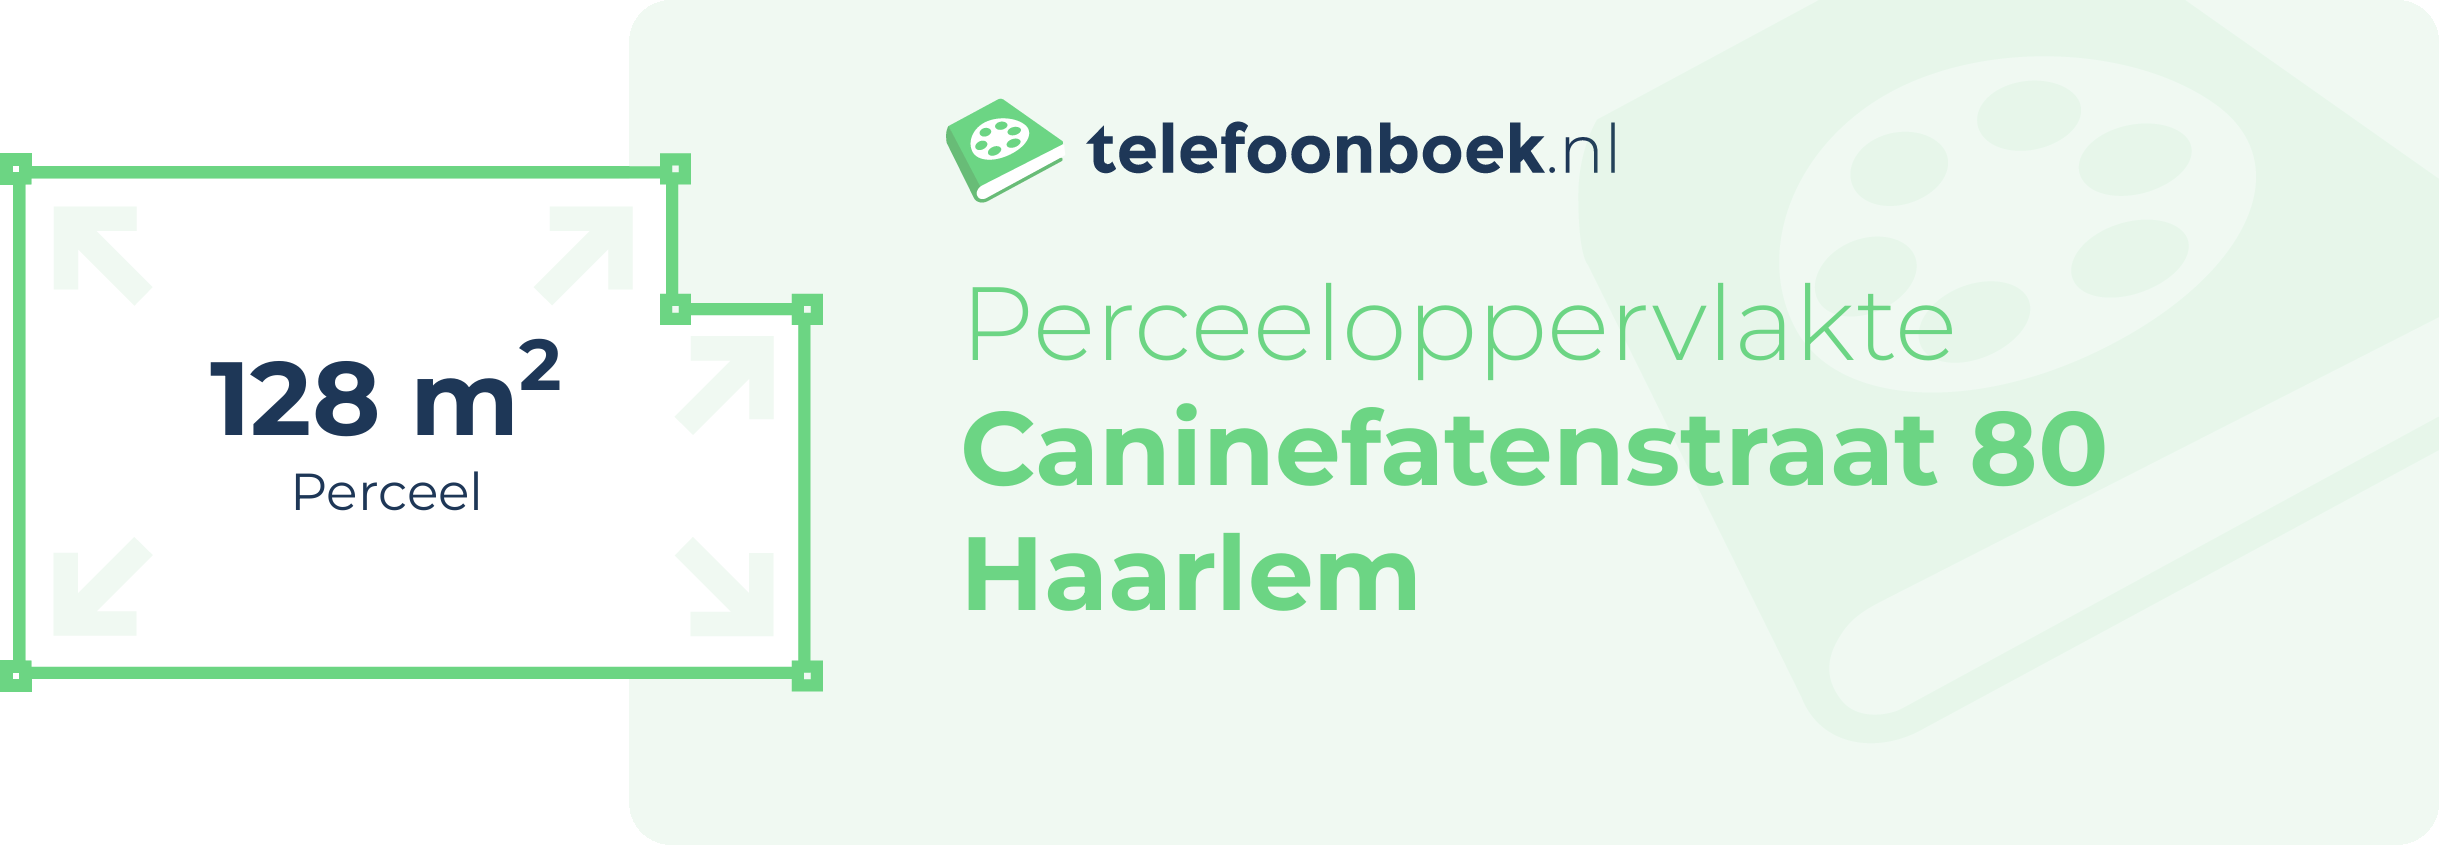 Perceeloppervlakte Caninefatenstraat 80 Haarlem